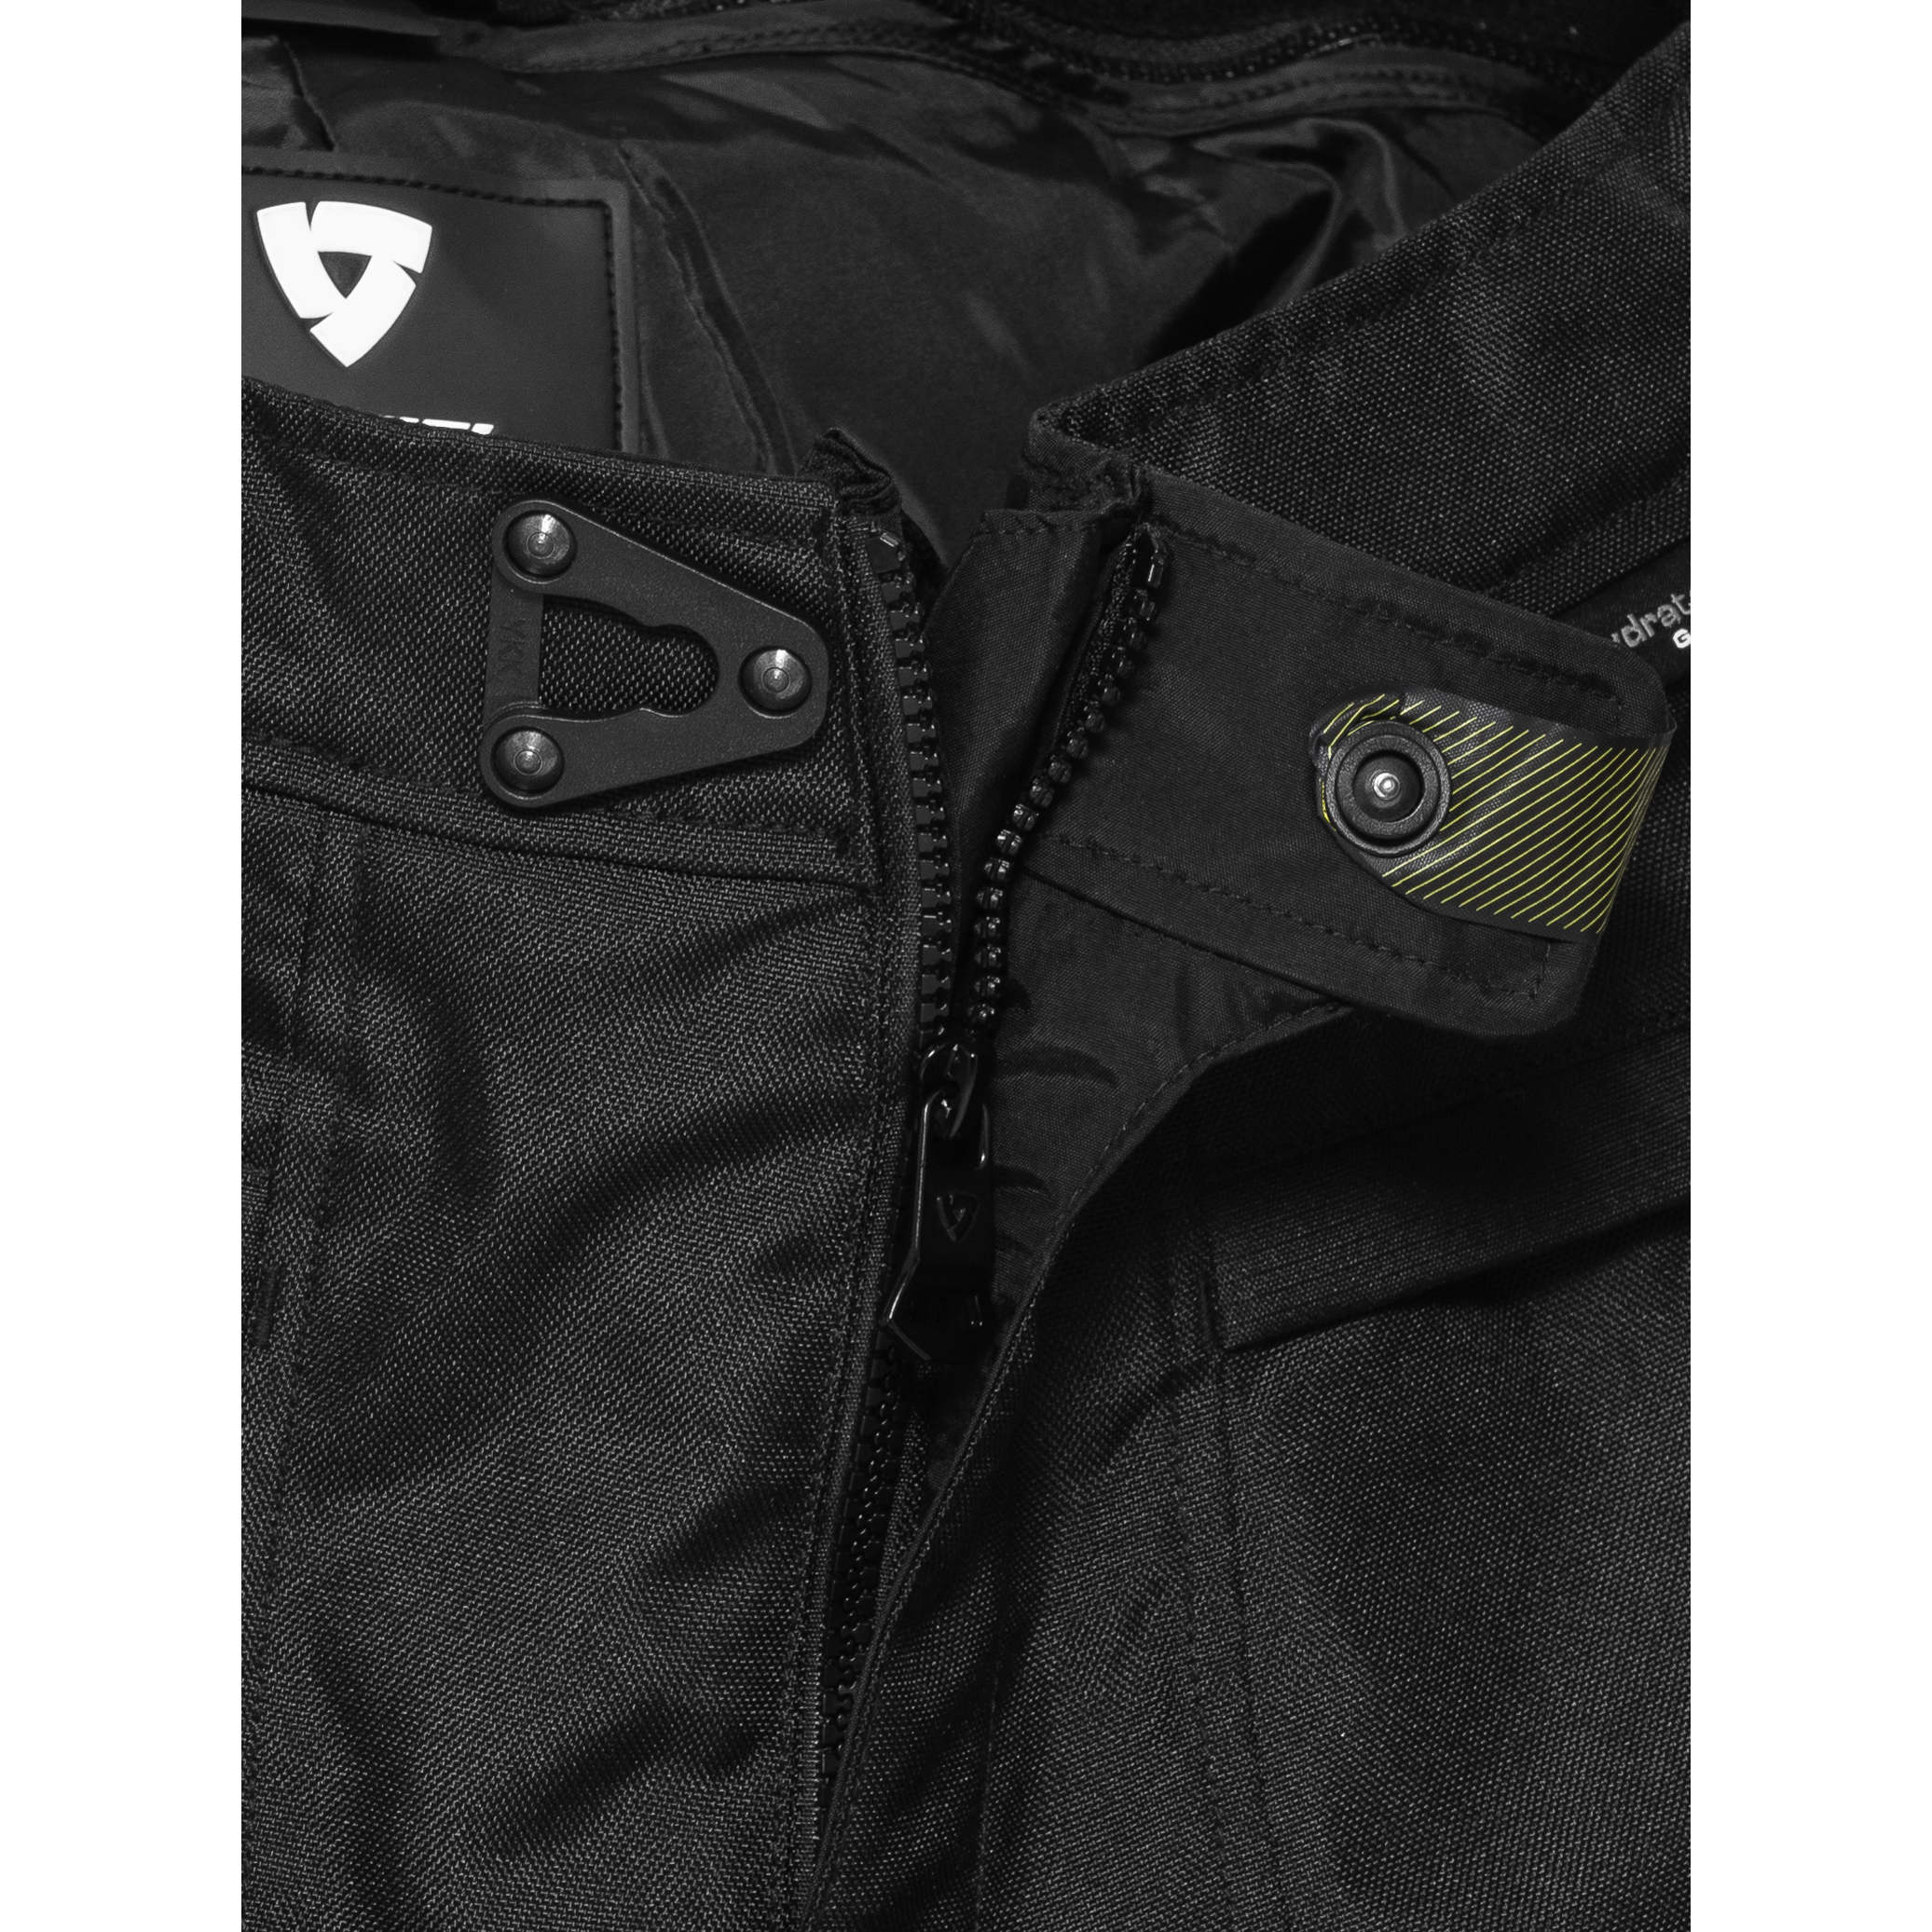 Buy REV'IT! Factor 4 Textile Pants black M (short) Black - POLO 